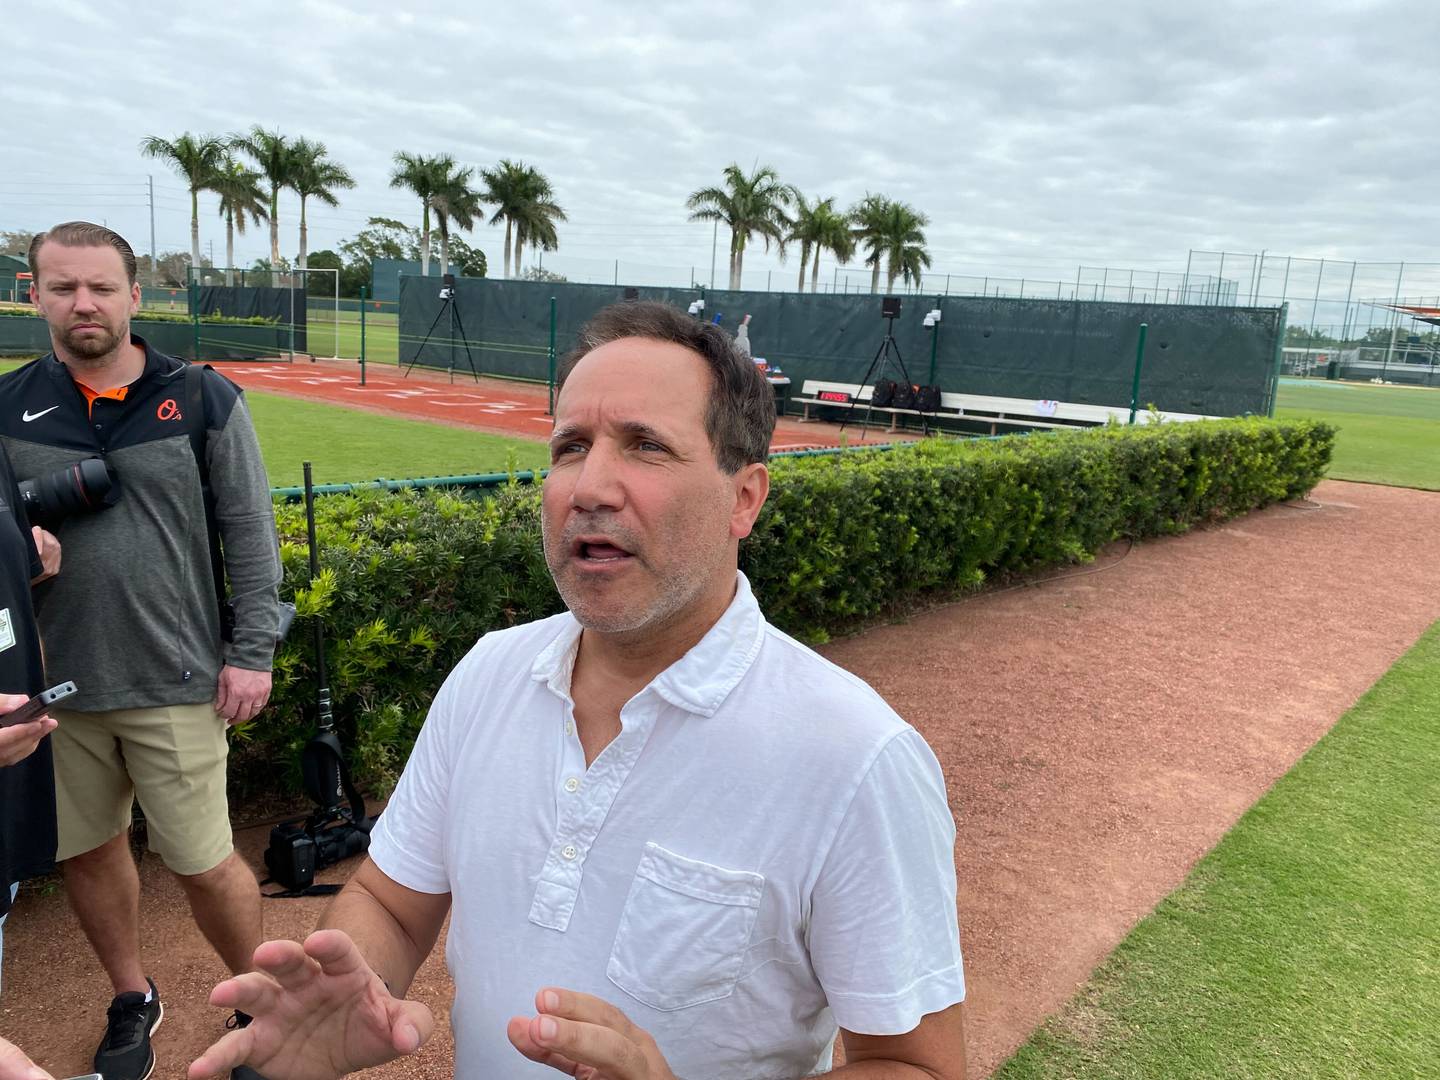 Orioles owner John Angelos speaks to the media during spring training in Sarasota, Florida